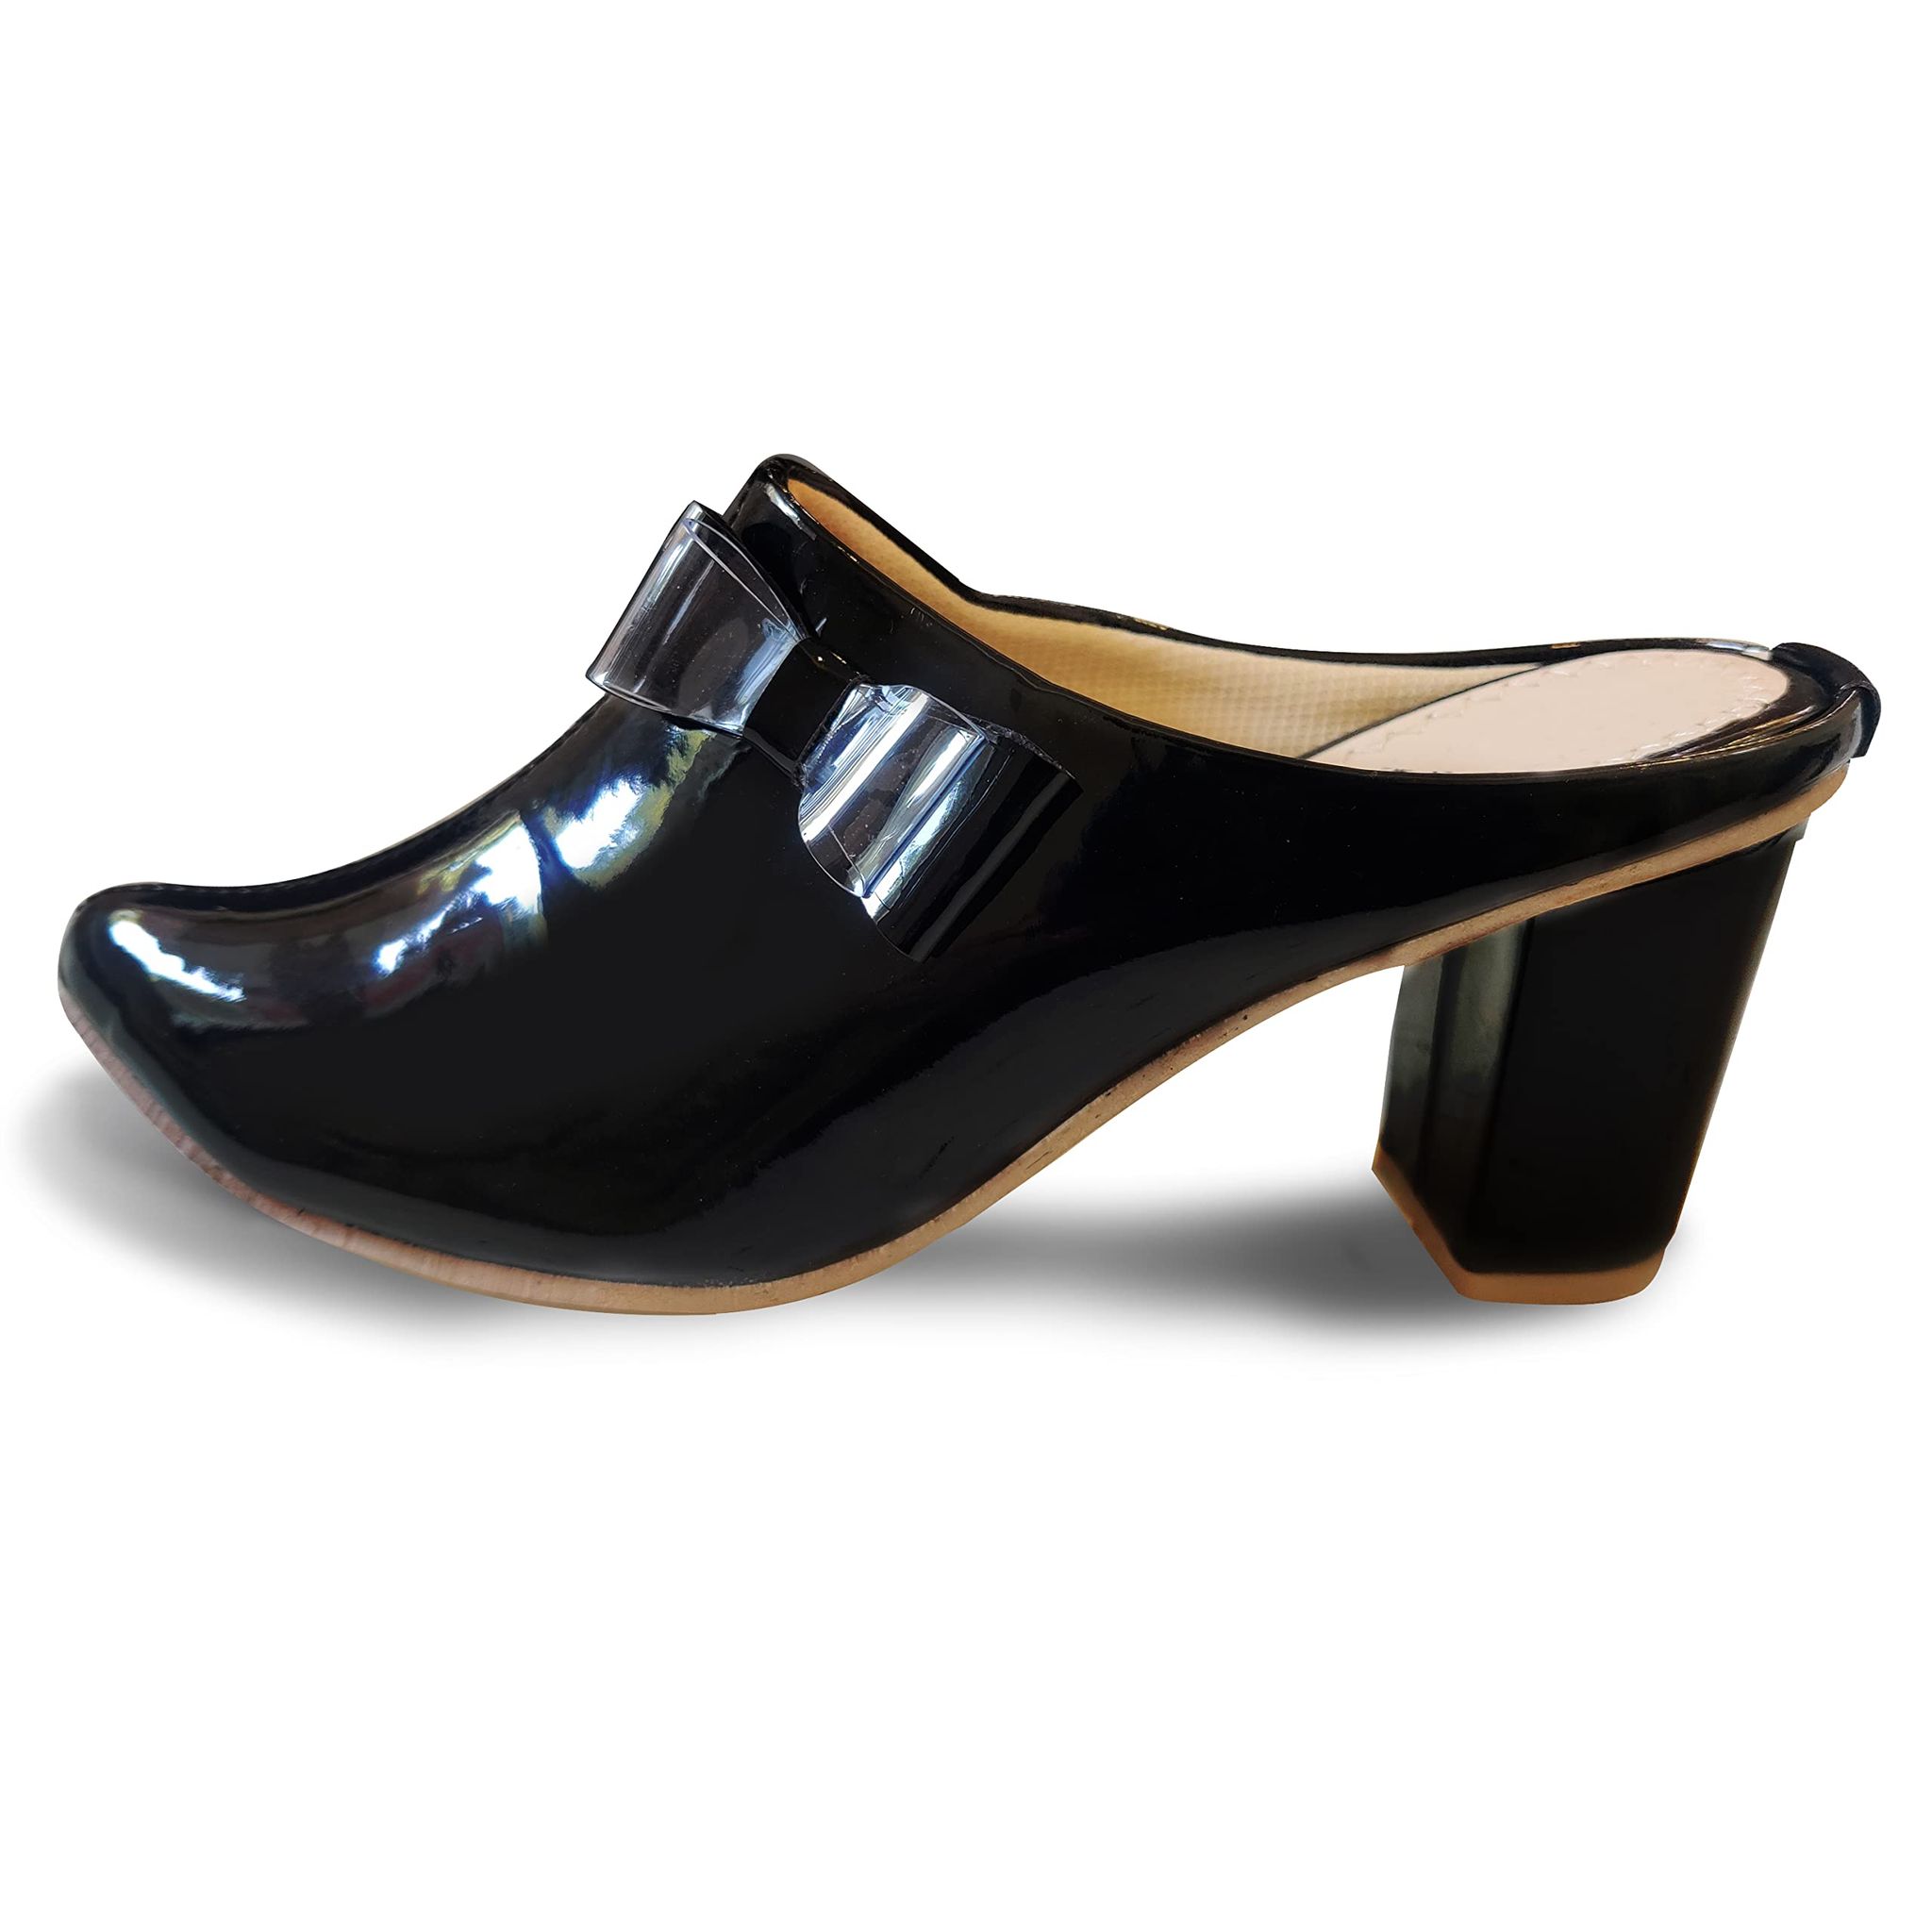 Buy PiePieBuy Womens Espadrille Wedges Ankle Strap Closed Toe Heeled Sandals  (7 B(M) US, Black) at Amazon.in